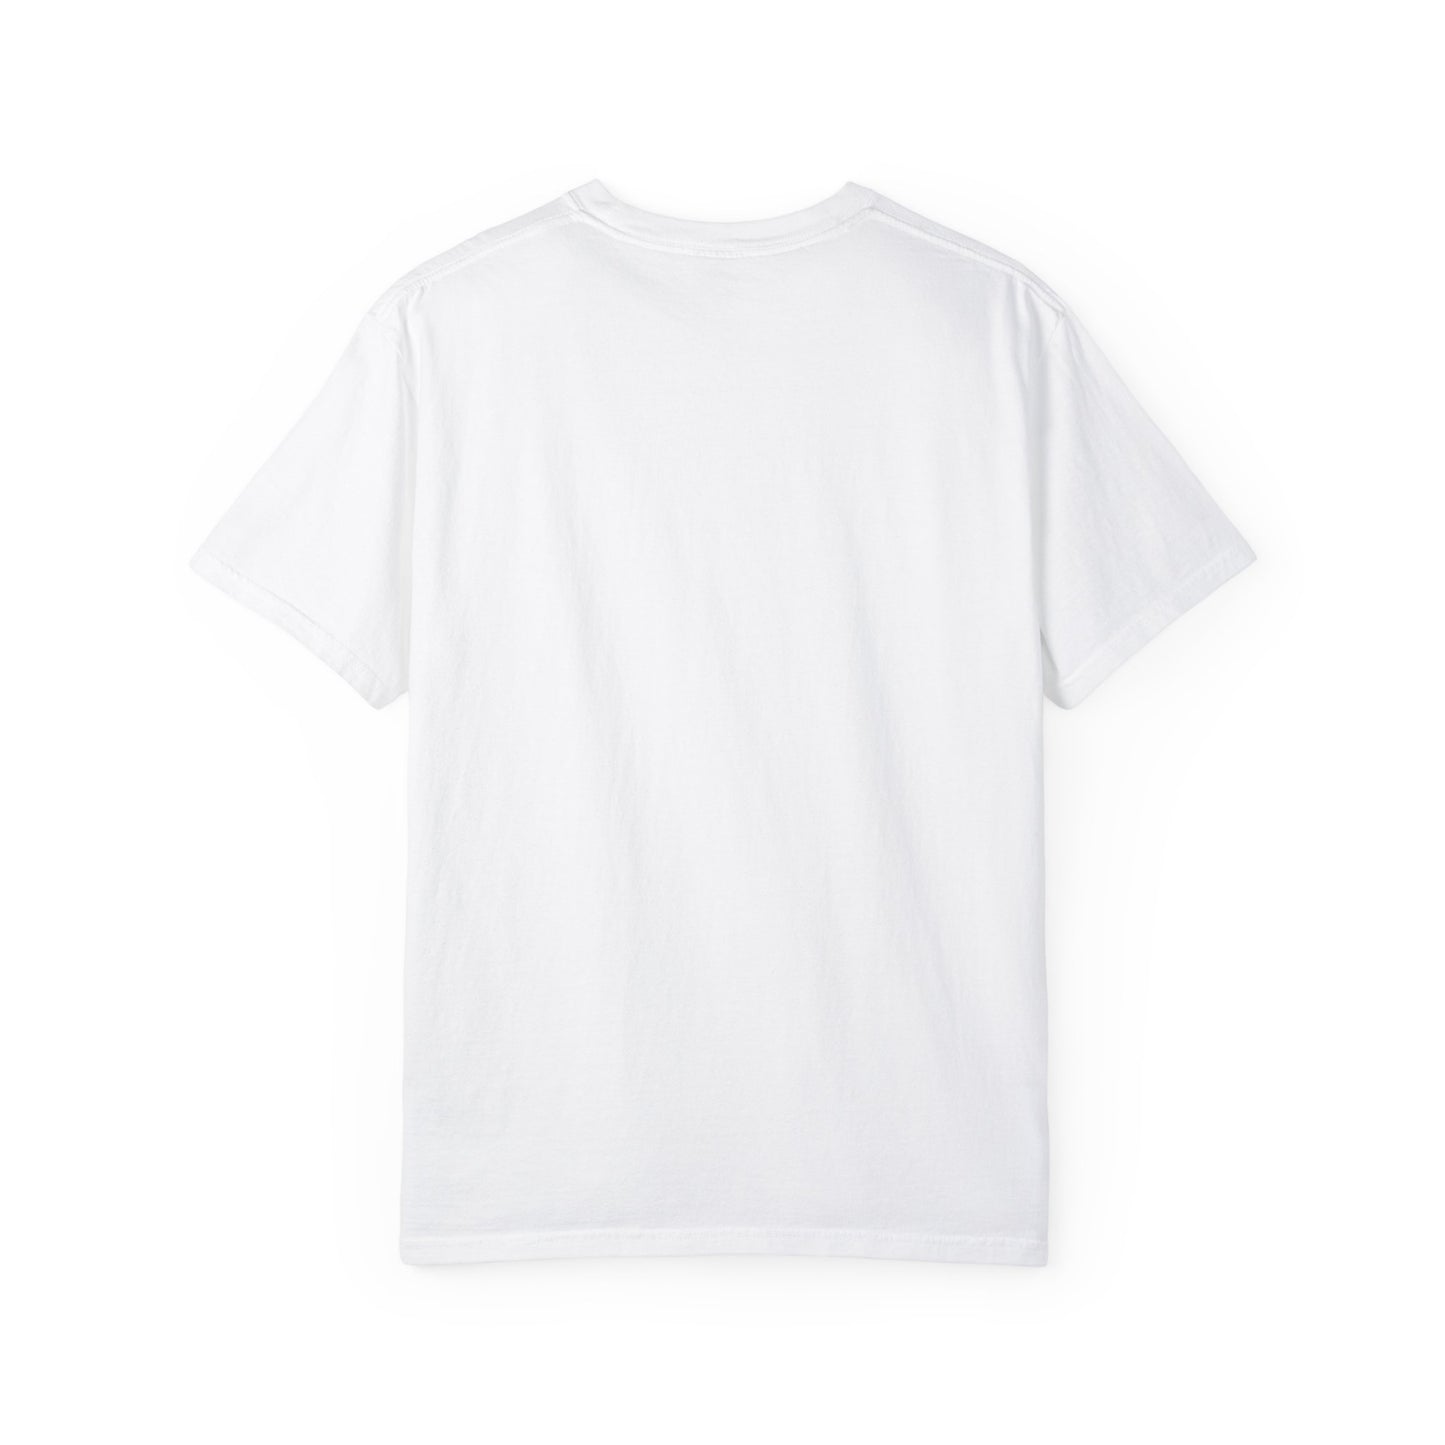 Ahegao Unisex T-shirt - Get the Most UwU Design